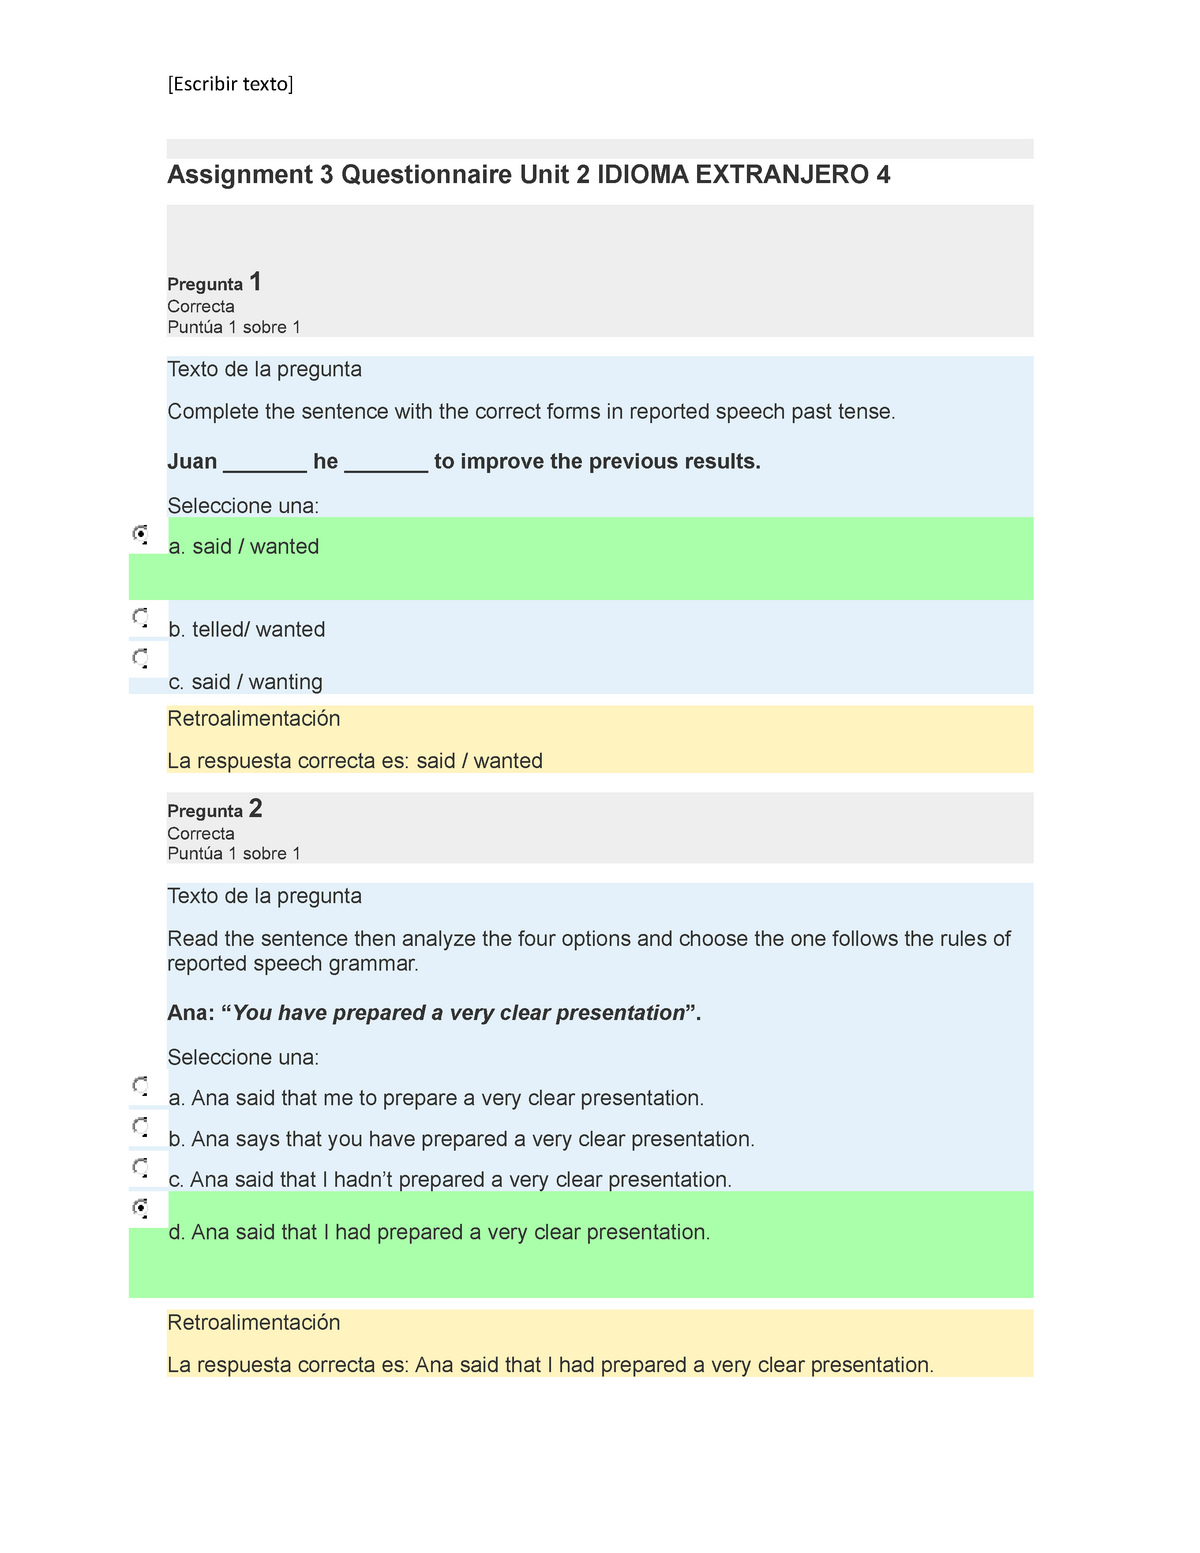 assignment 3 questionnaire unit 2 idioma extranjero iv